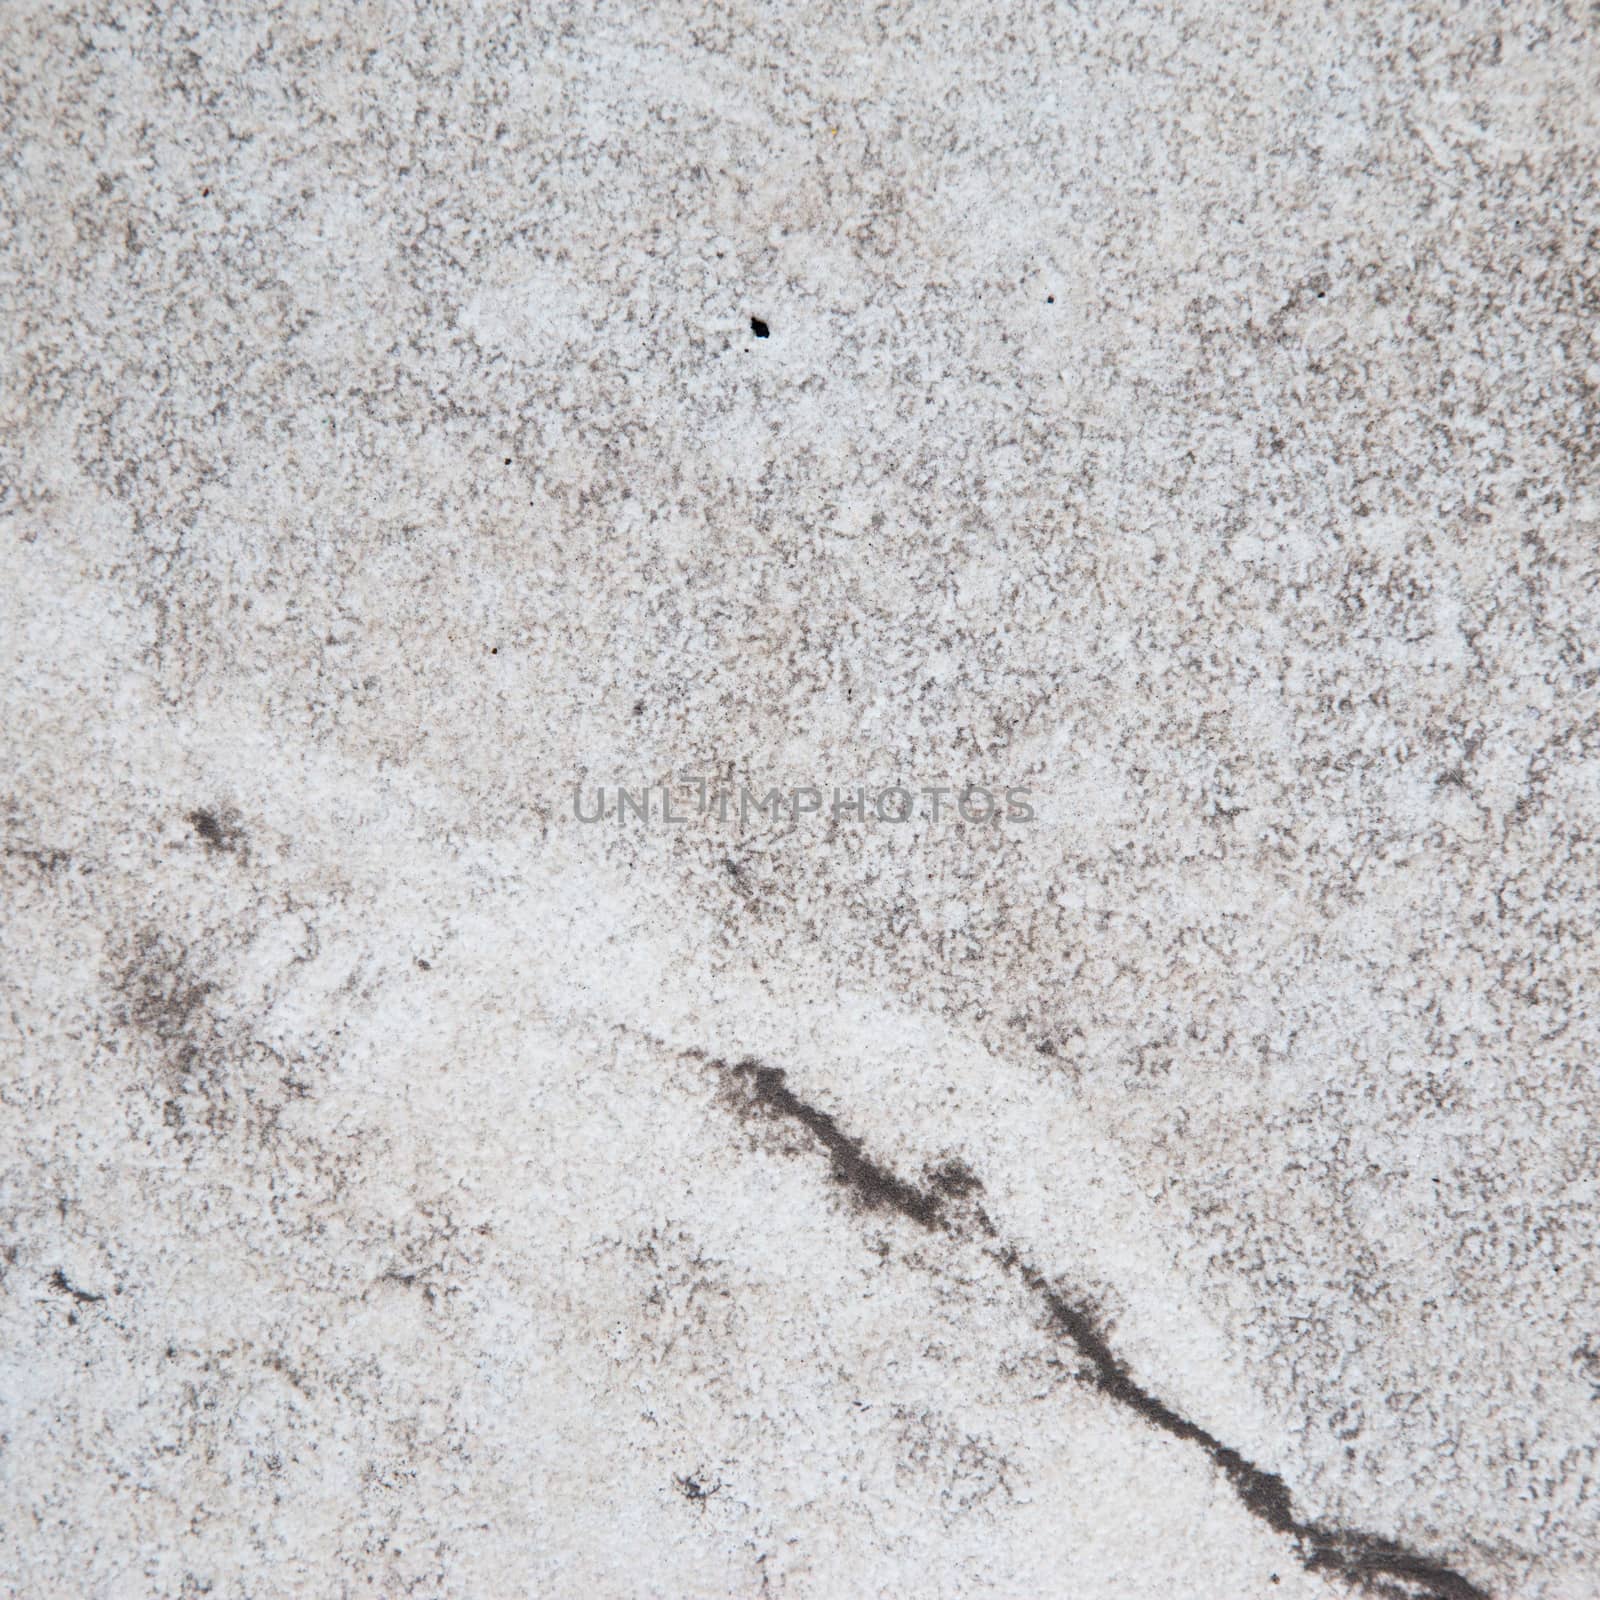 Dust dirty on white floor tile texture